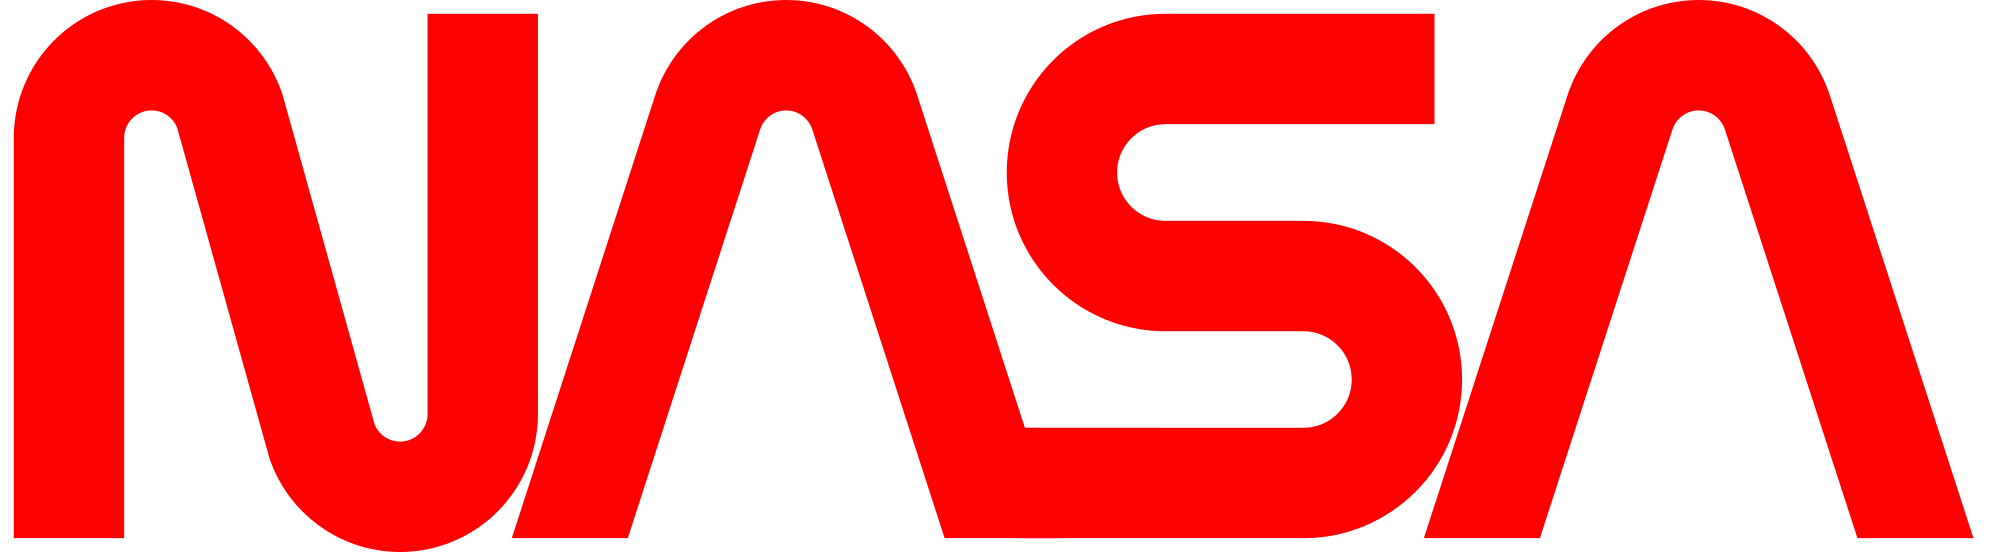 File:NASA Worm logo.svg - Wikimedia Commons